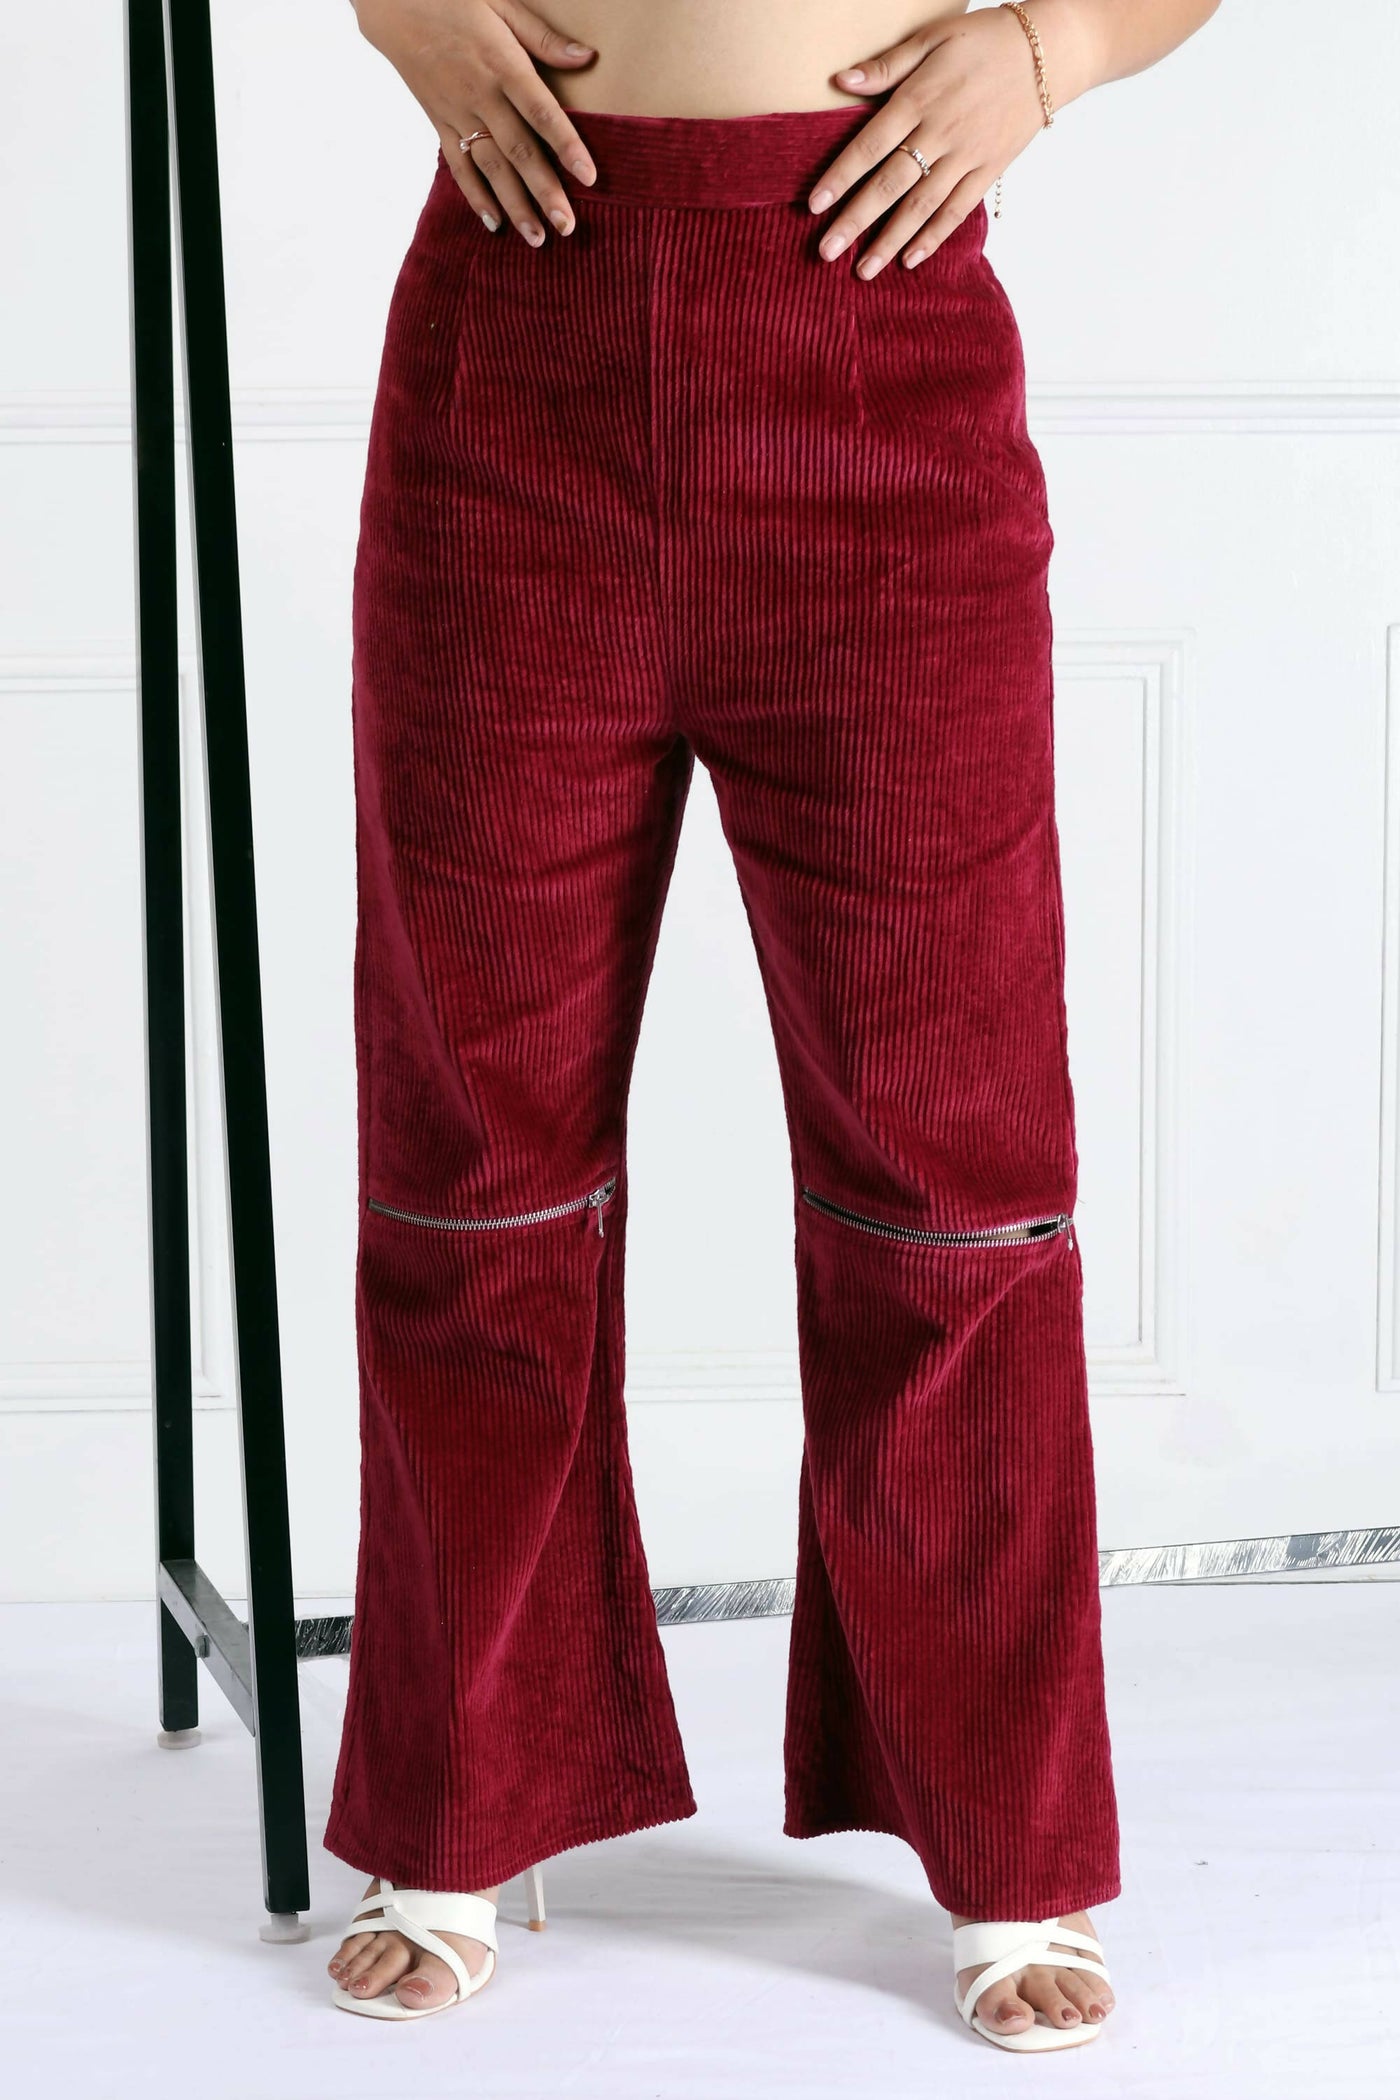 Lea Hibiscus Red Corduroy Pants